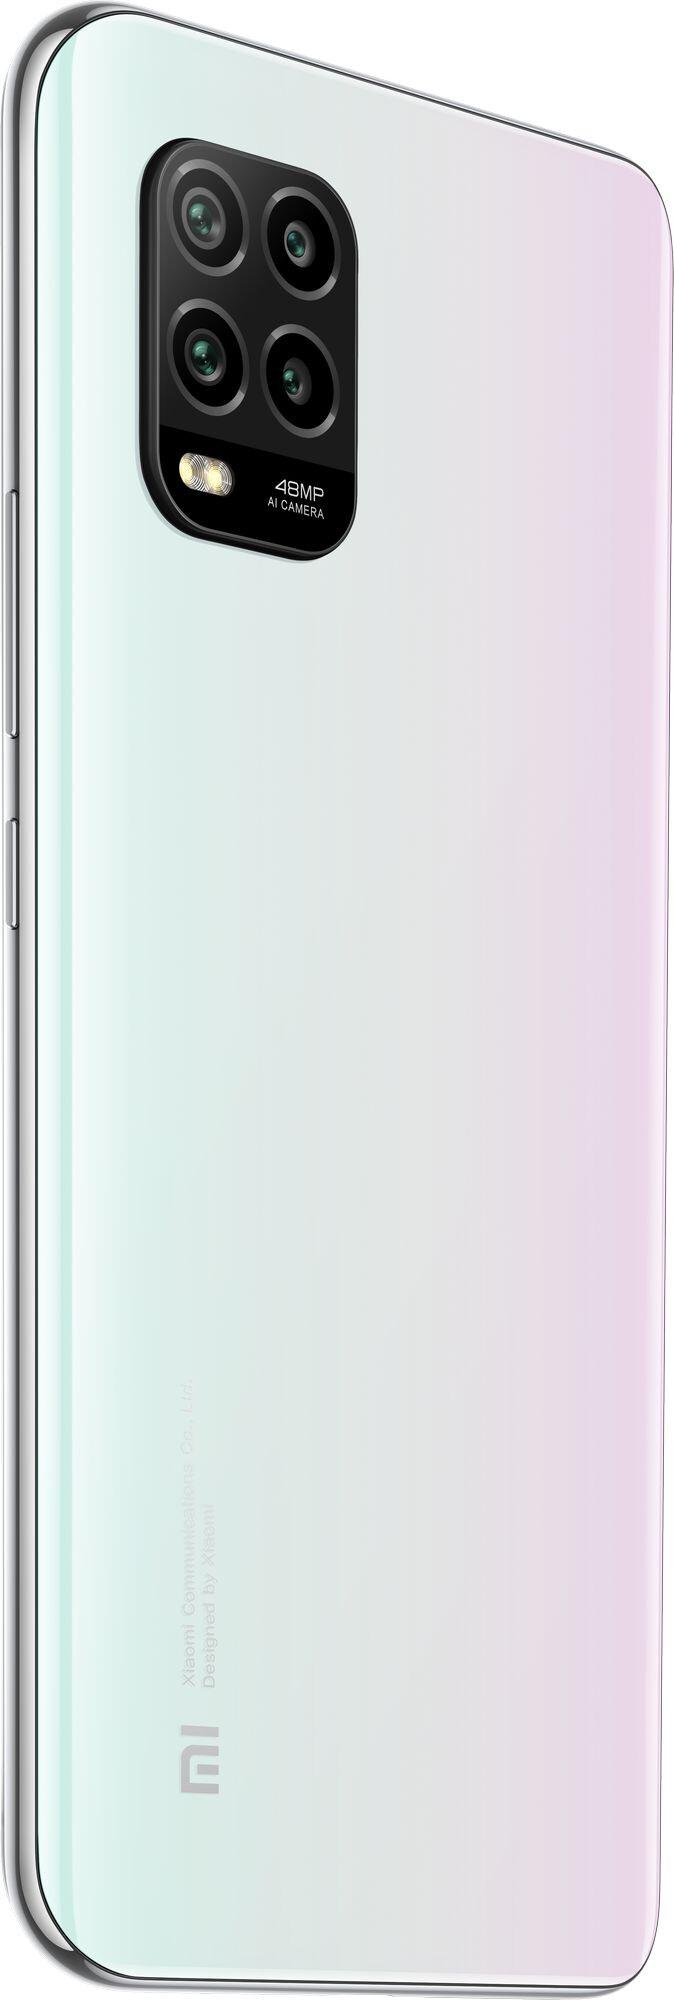 Купить Смартфон Xiaomi Mi 10 Lite 5G 6/64Gb Dream White